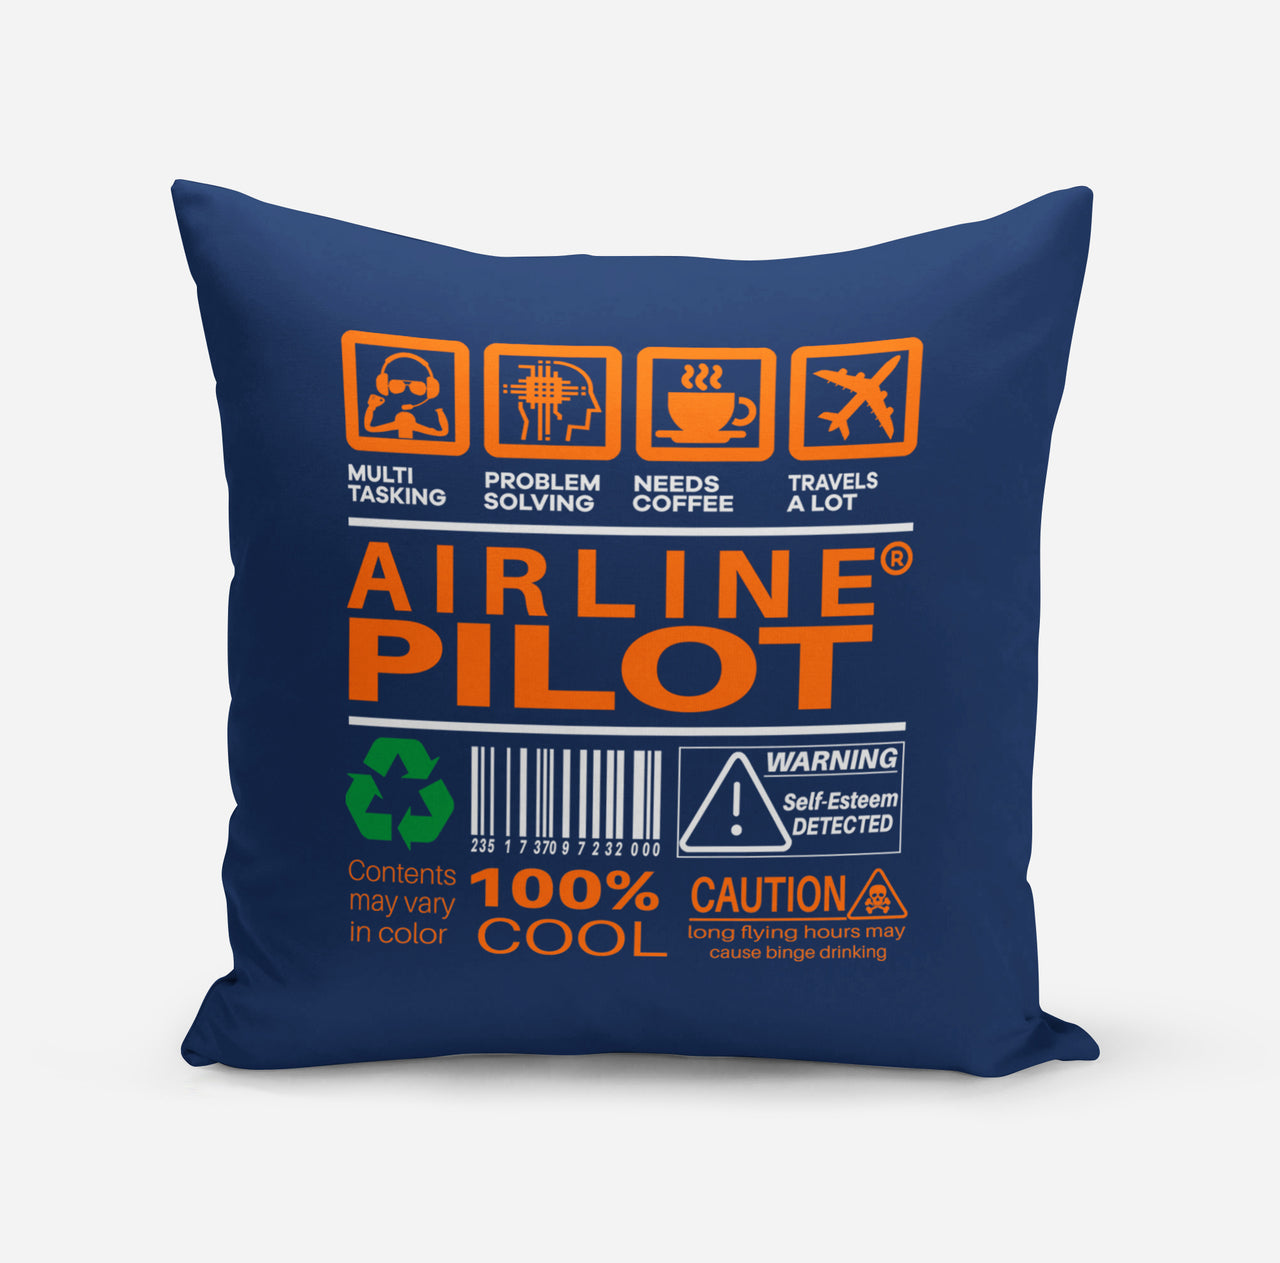 Airline Pilot Label Designed Pillows